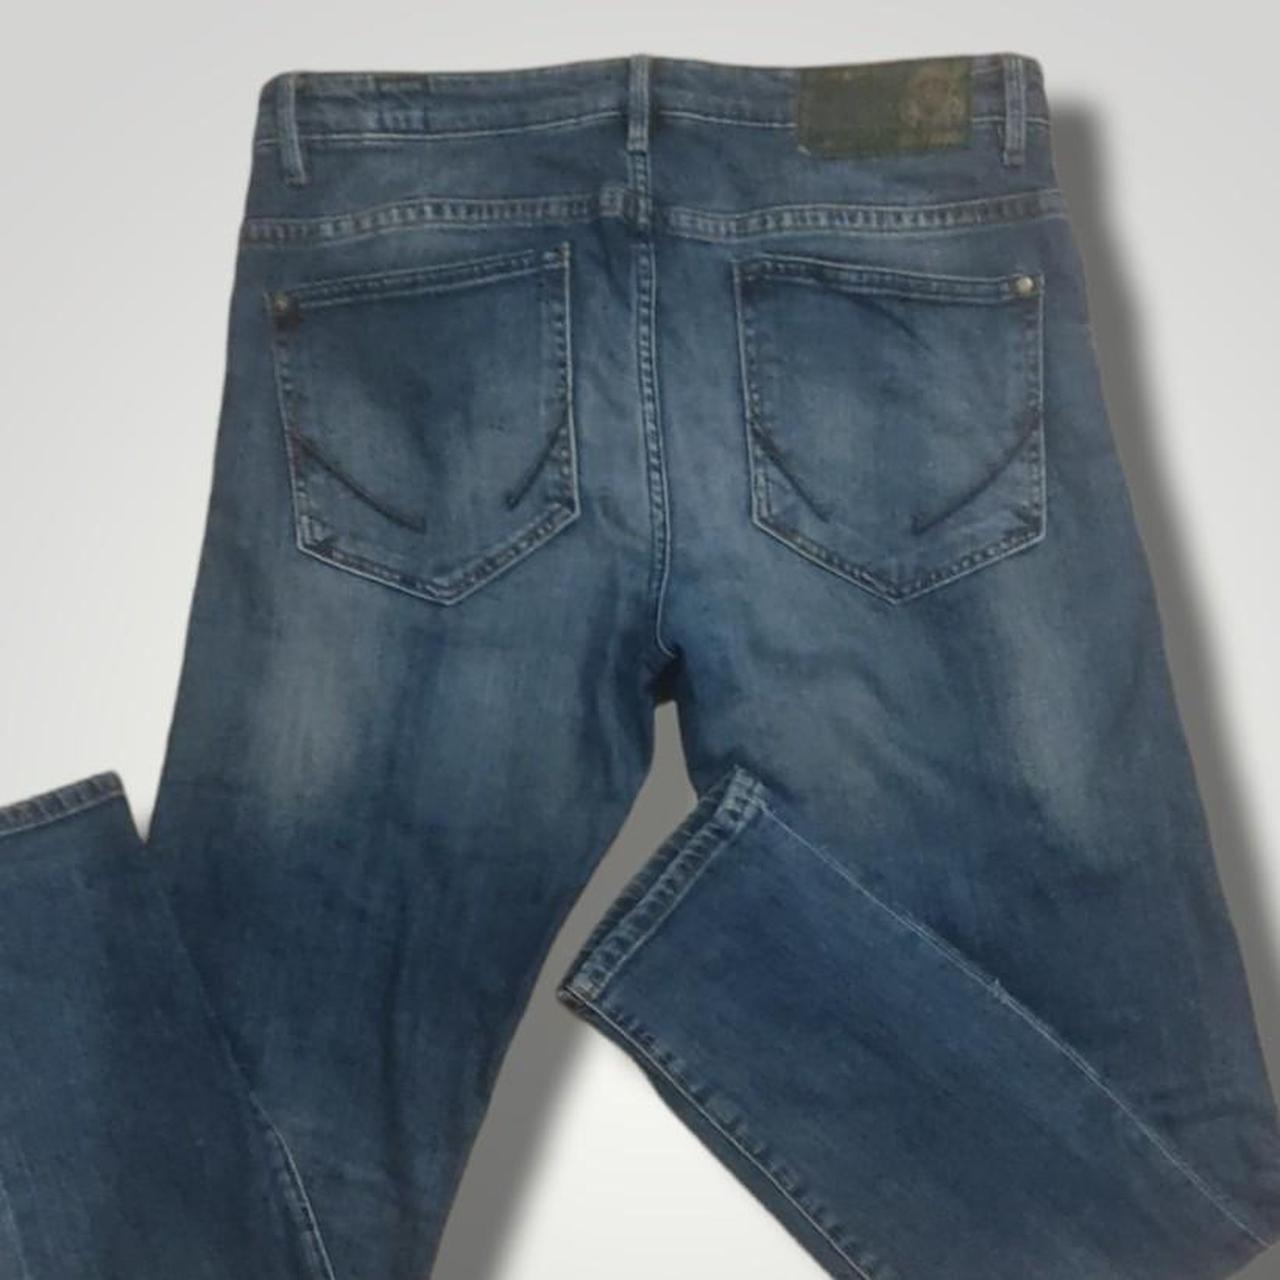 Allen Solly jeans co Est 1744 made different mens... - Depop